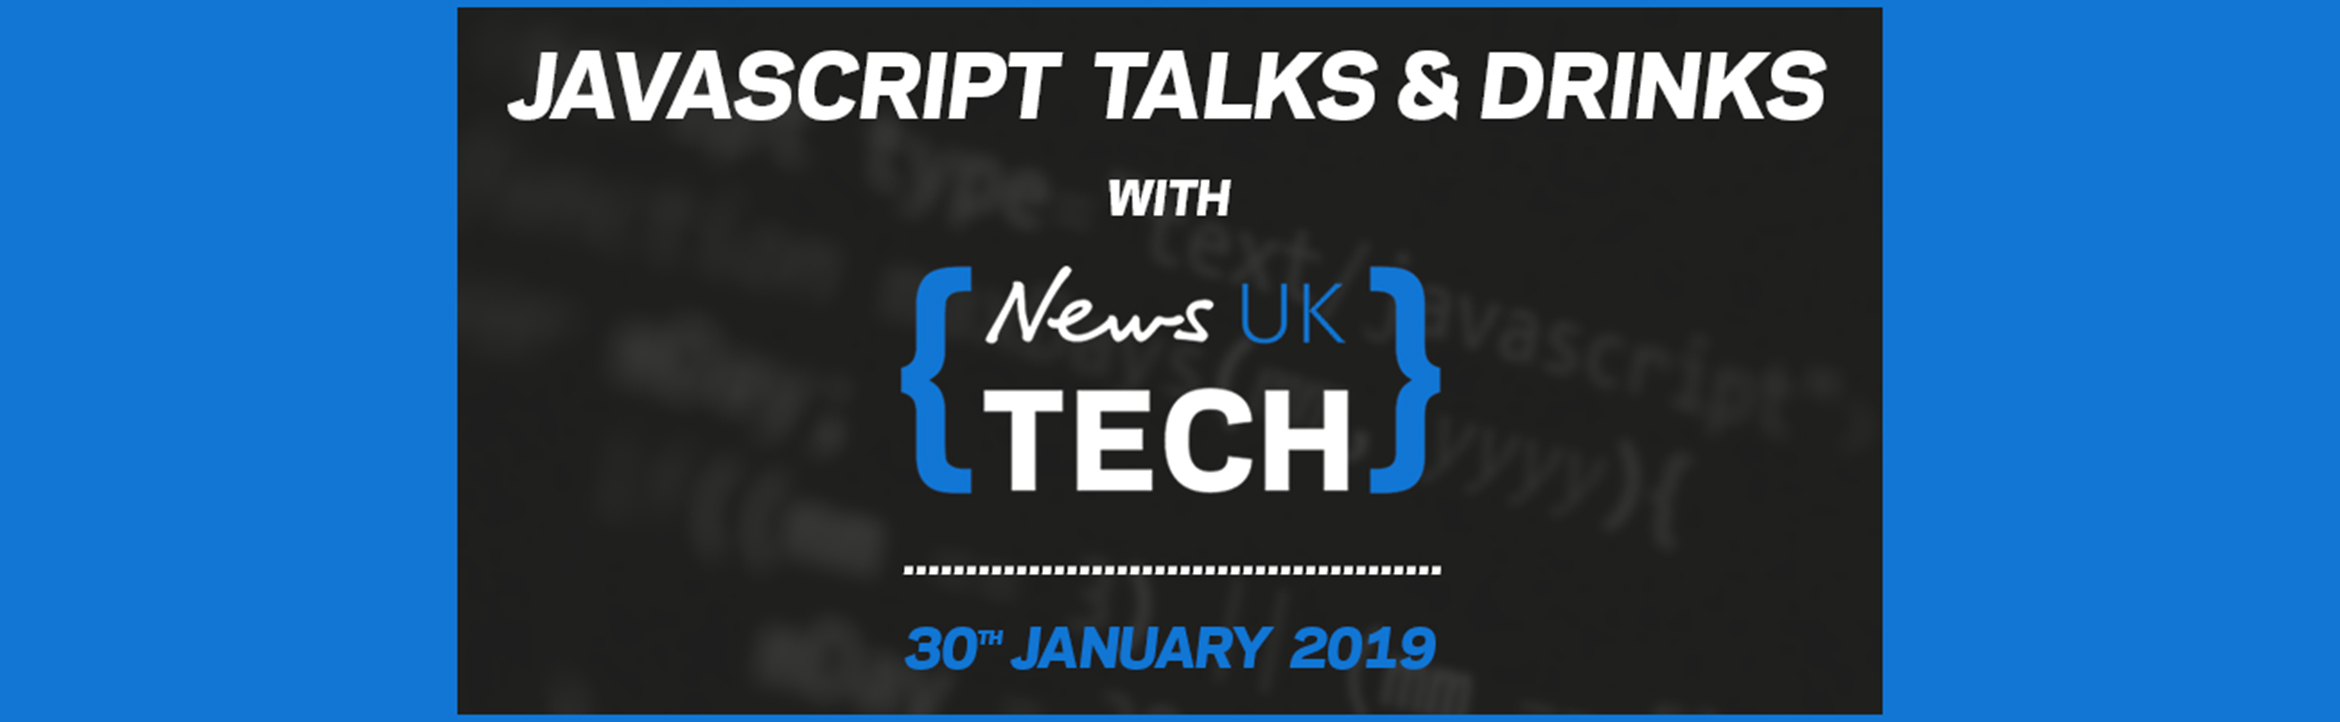 JavaScript Talks & Drinks with News UK - Questers